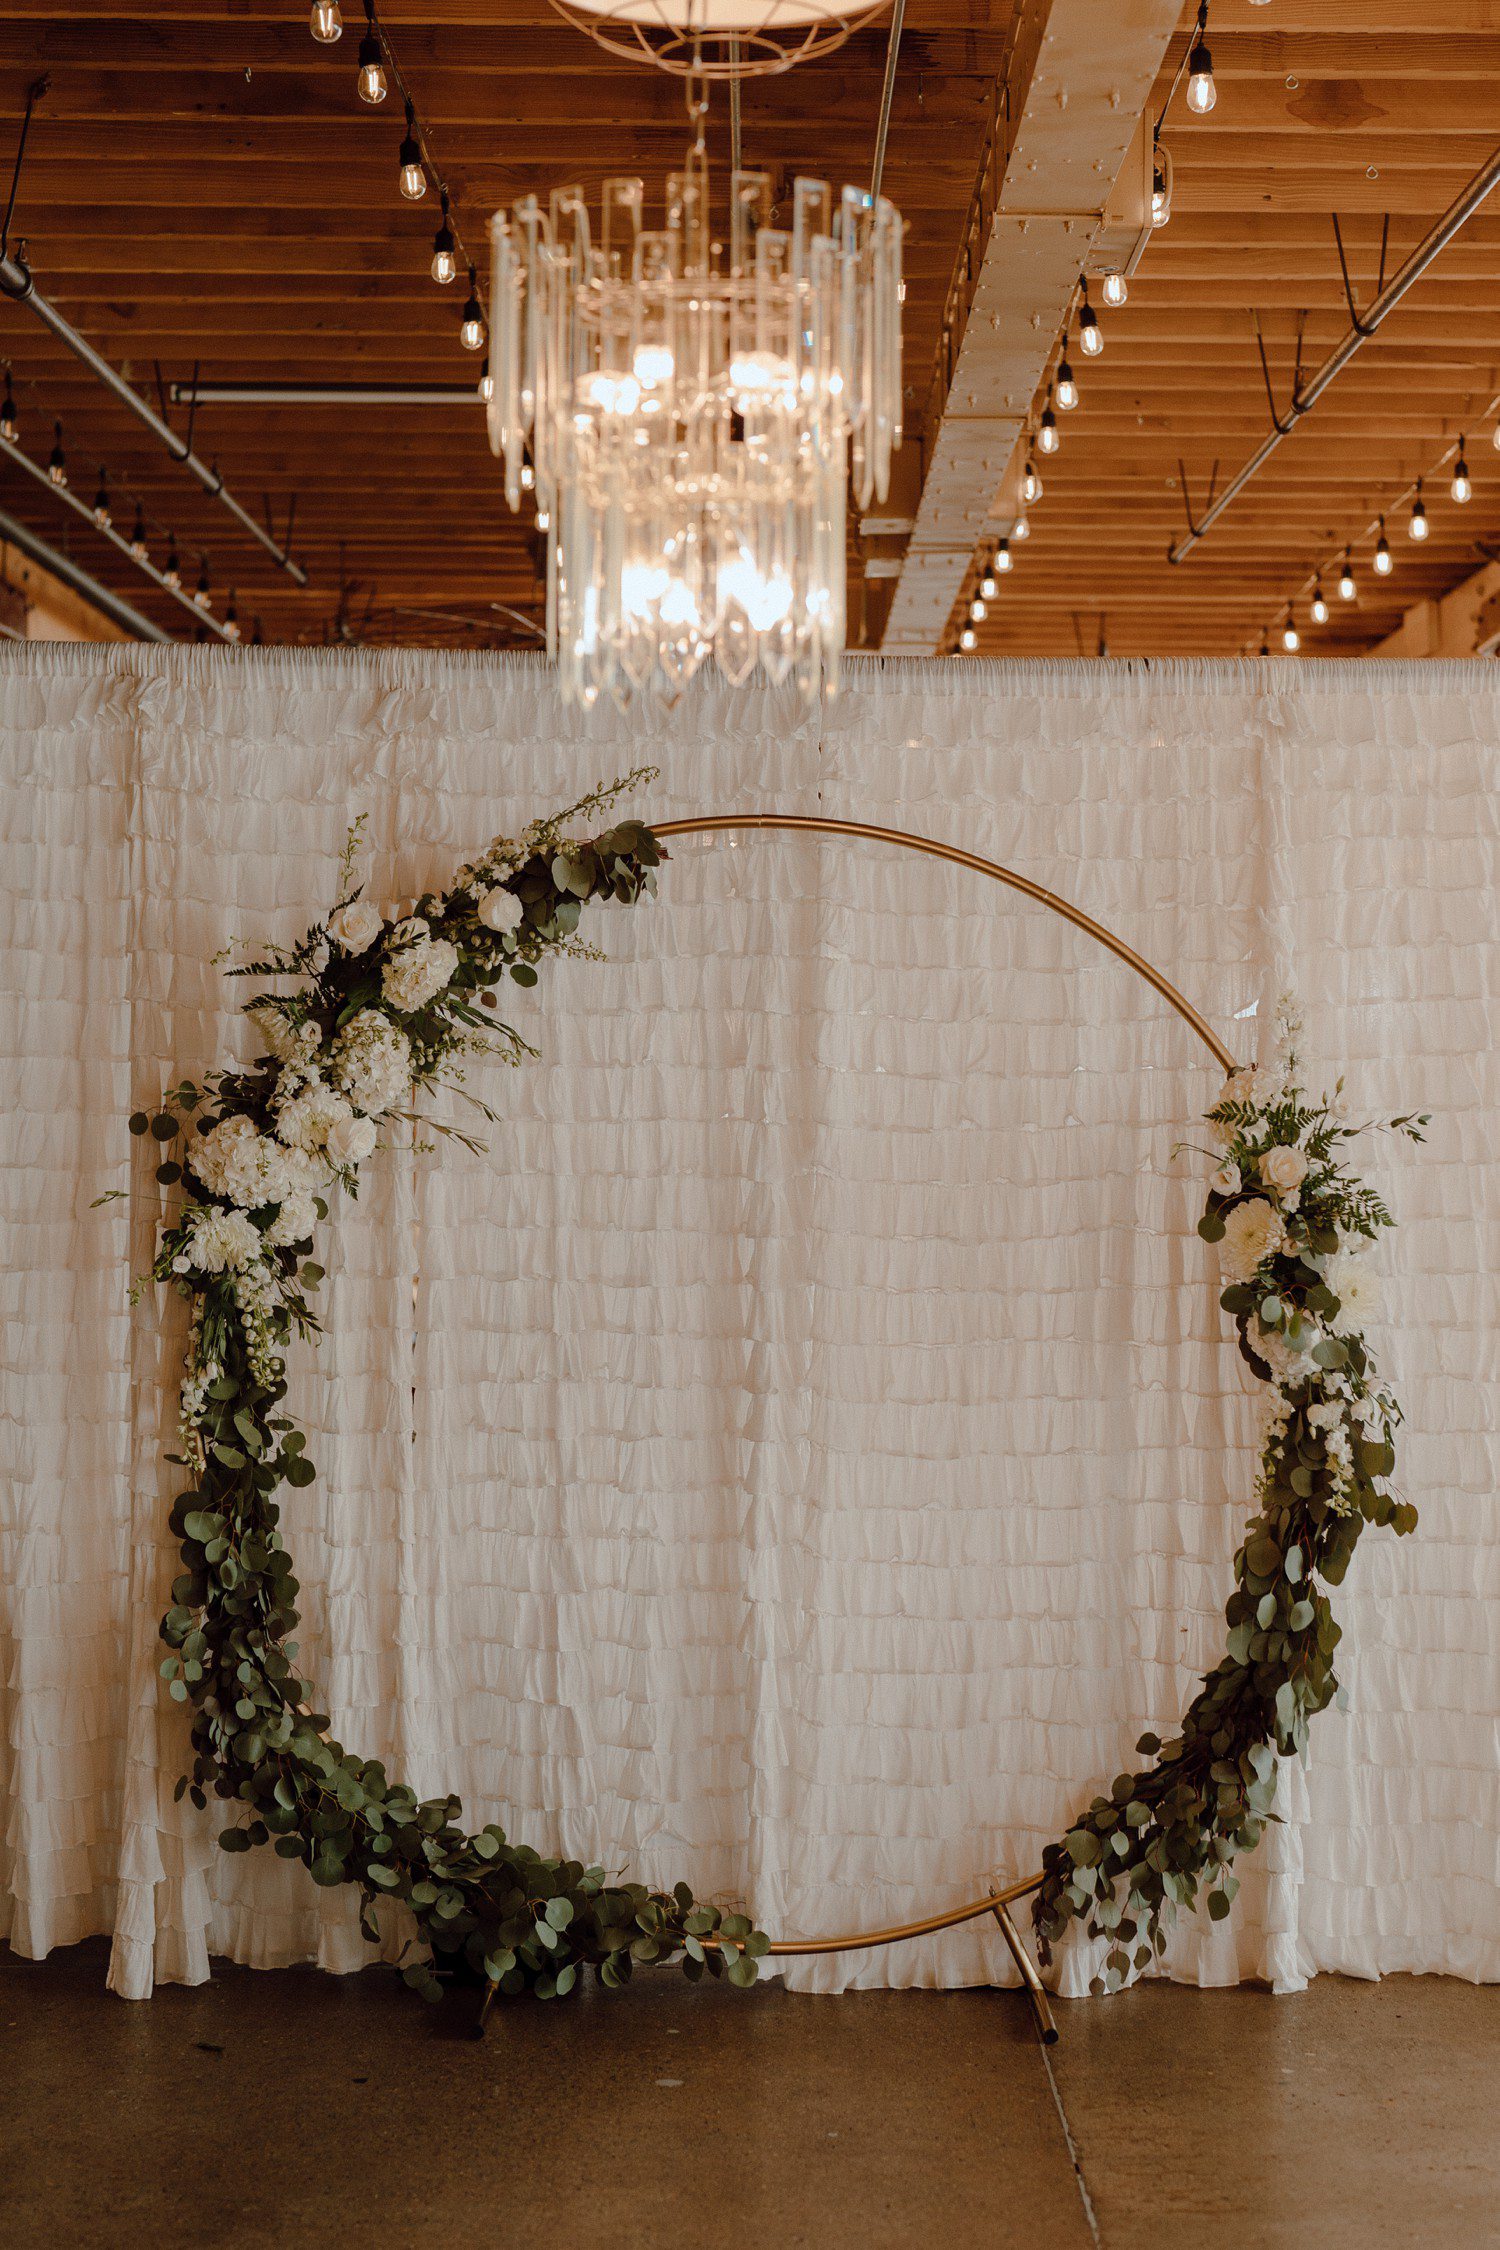 Circular Wedding Arch with Flowers